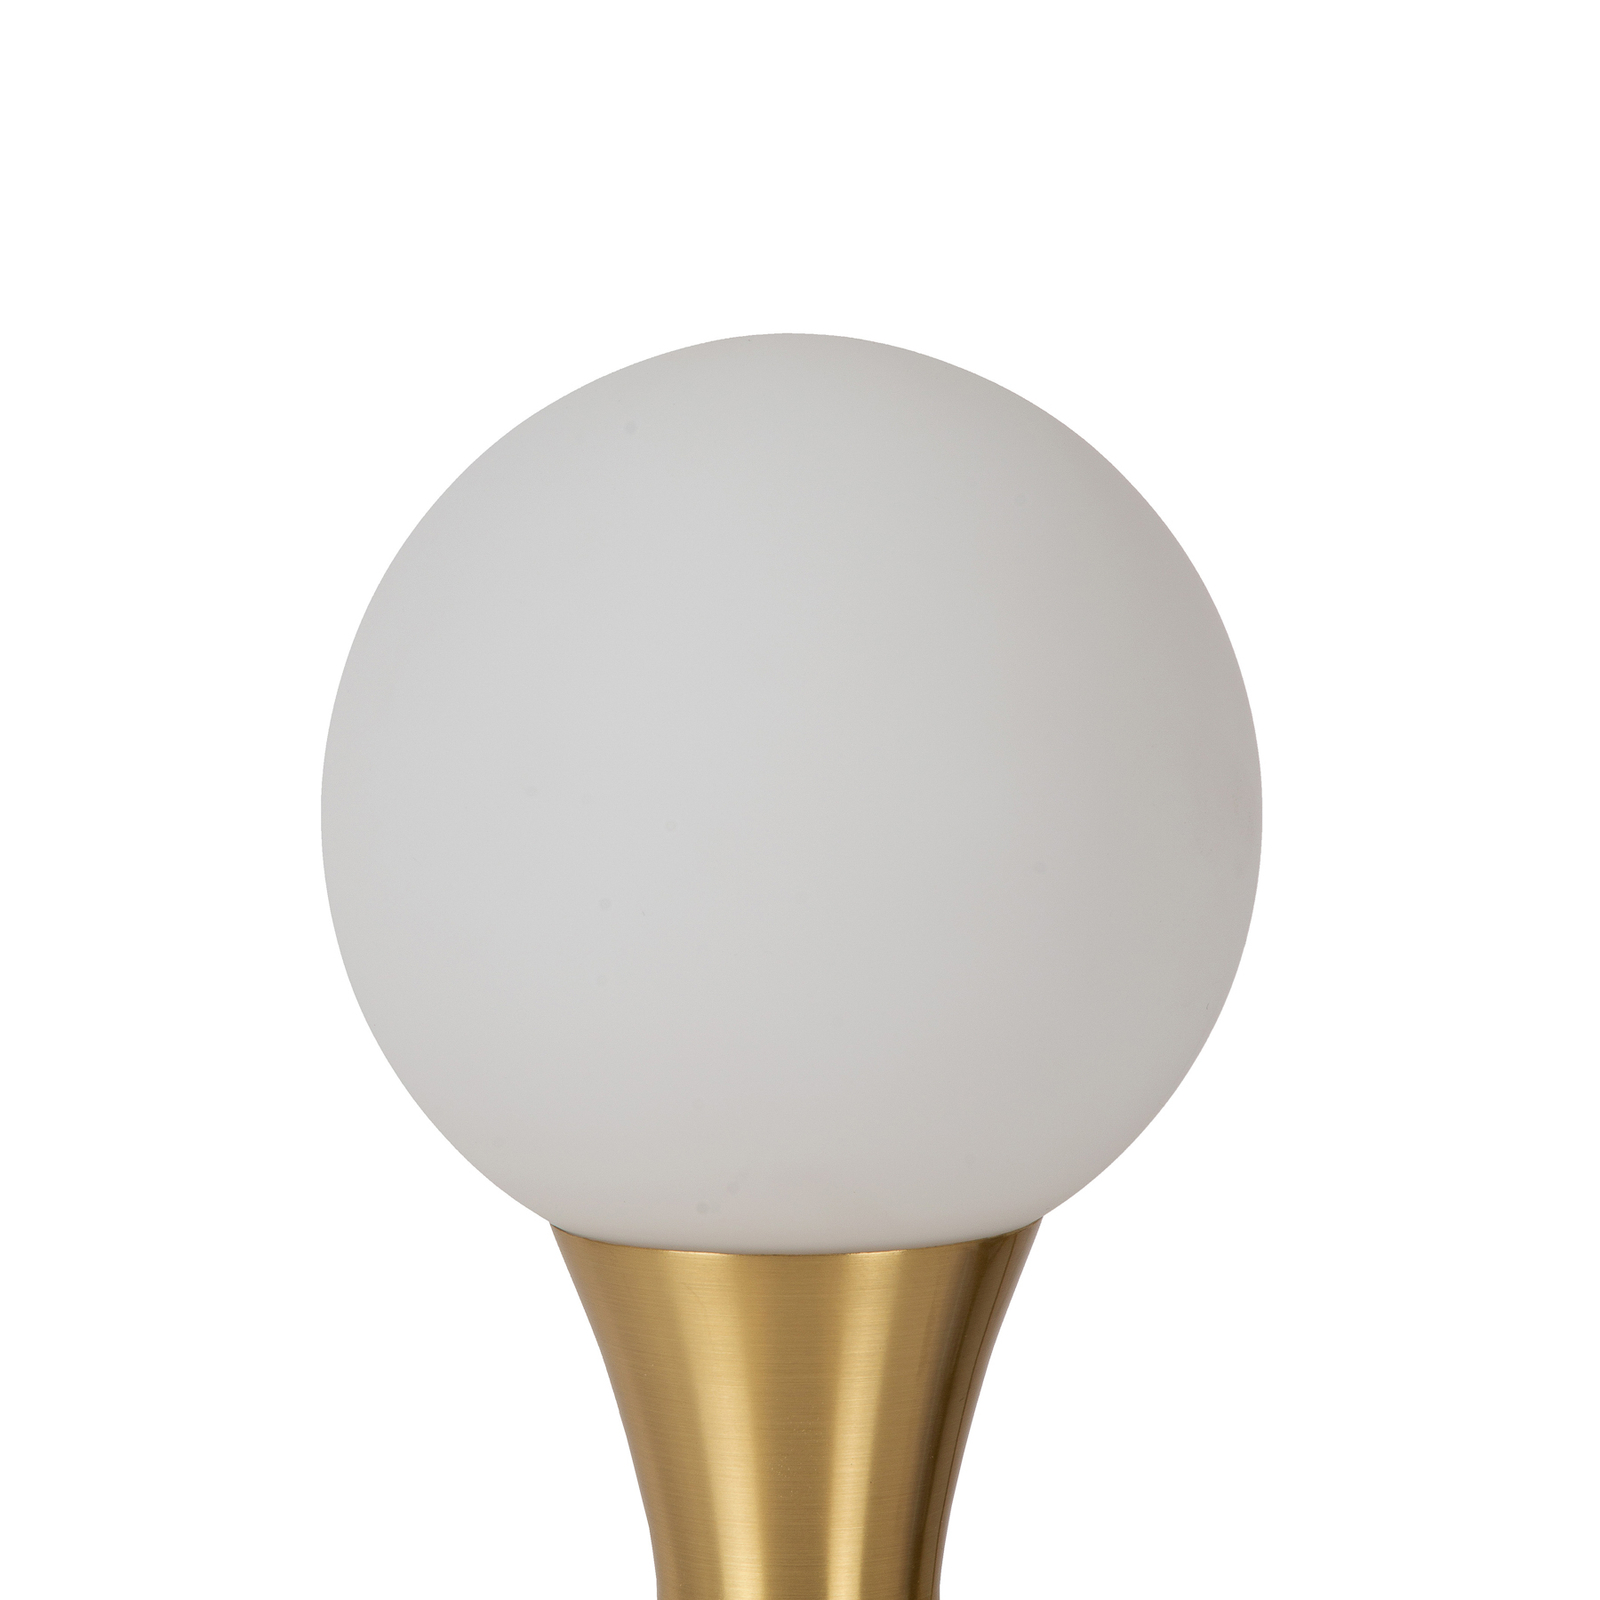 Bordslampa Moya med glasskärm, guld